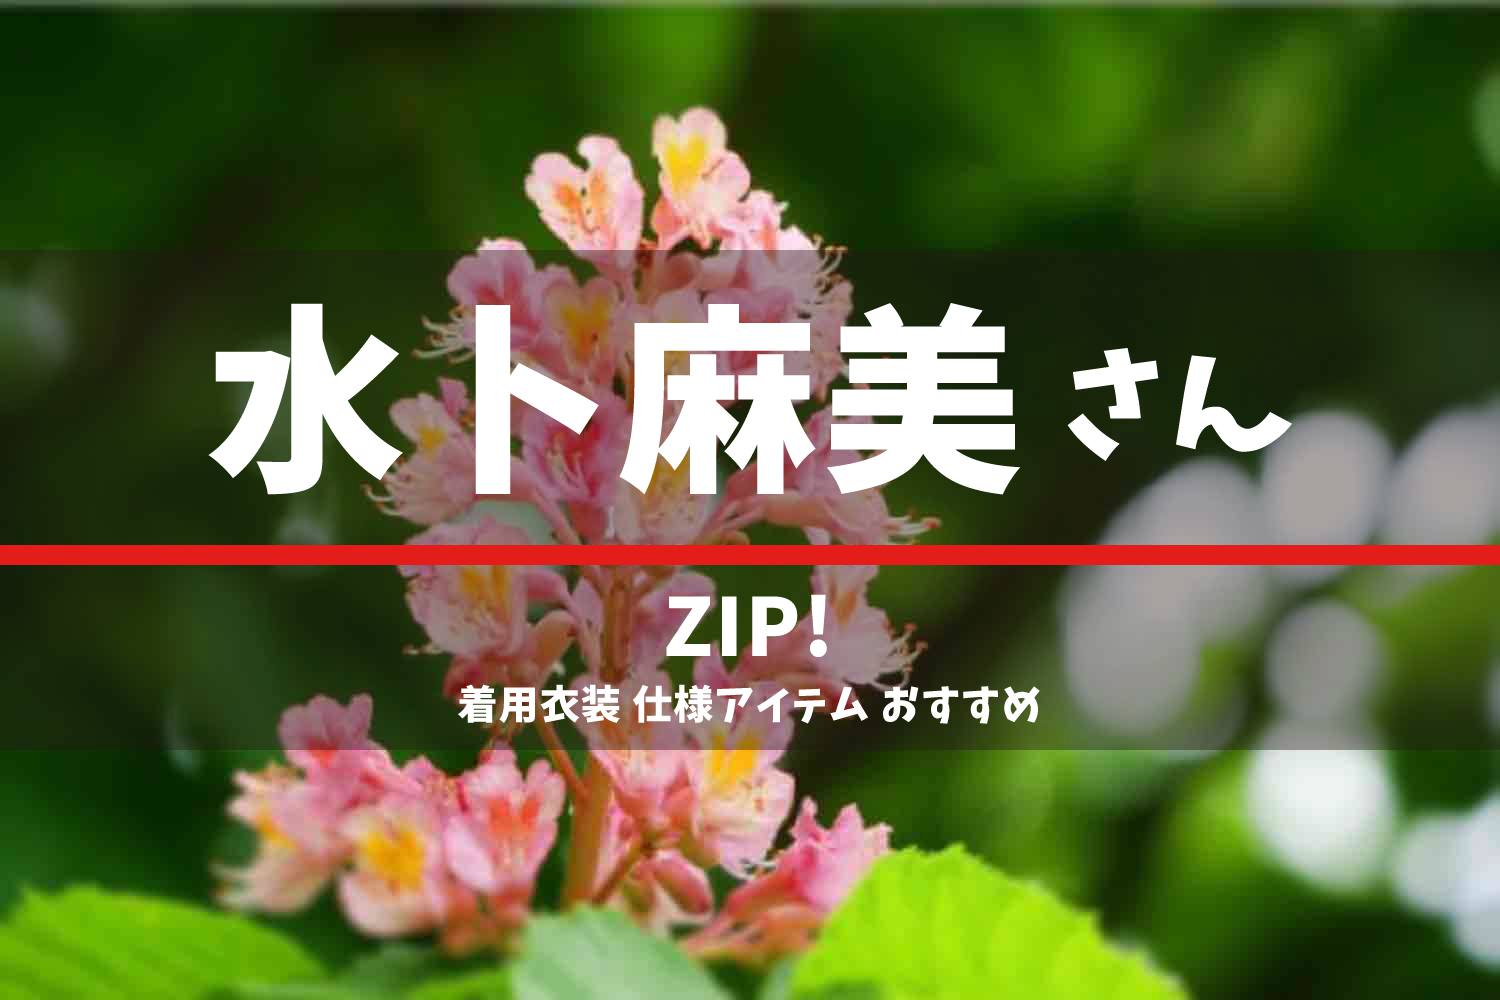 ZIP! 水卜麻美さん 番組 衣装 2022年6月21日放送